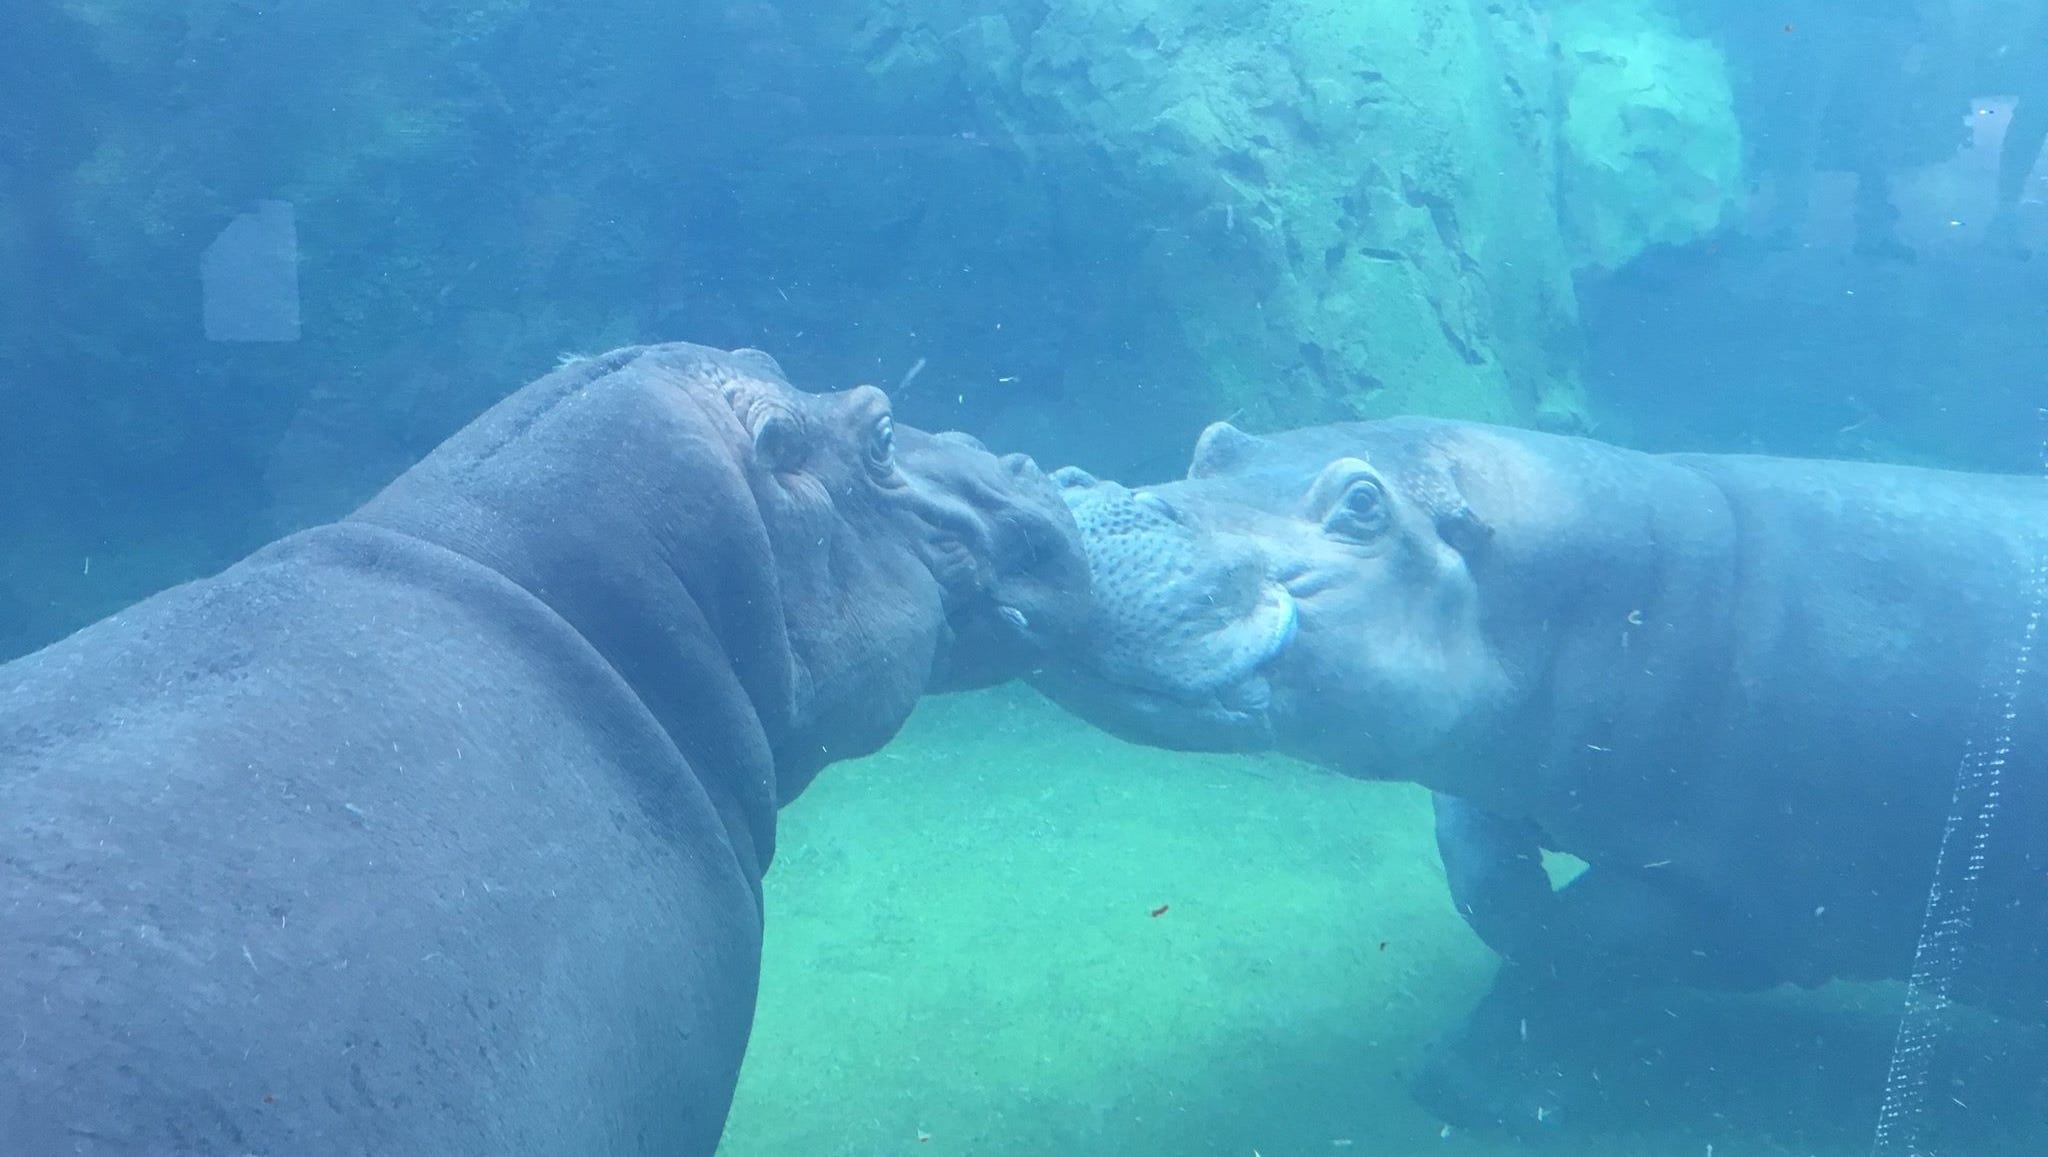 cincinnati zoo hippo barn tour